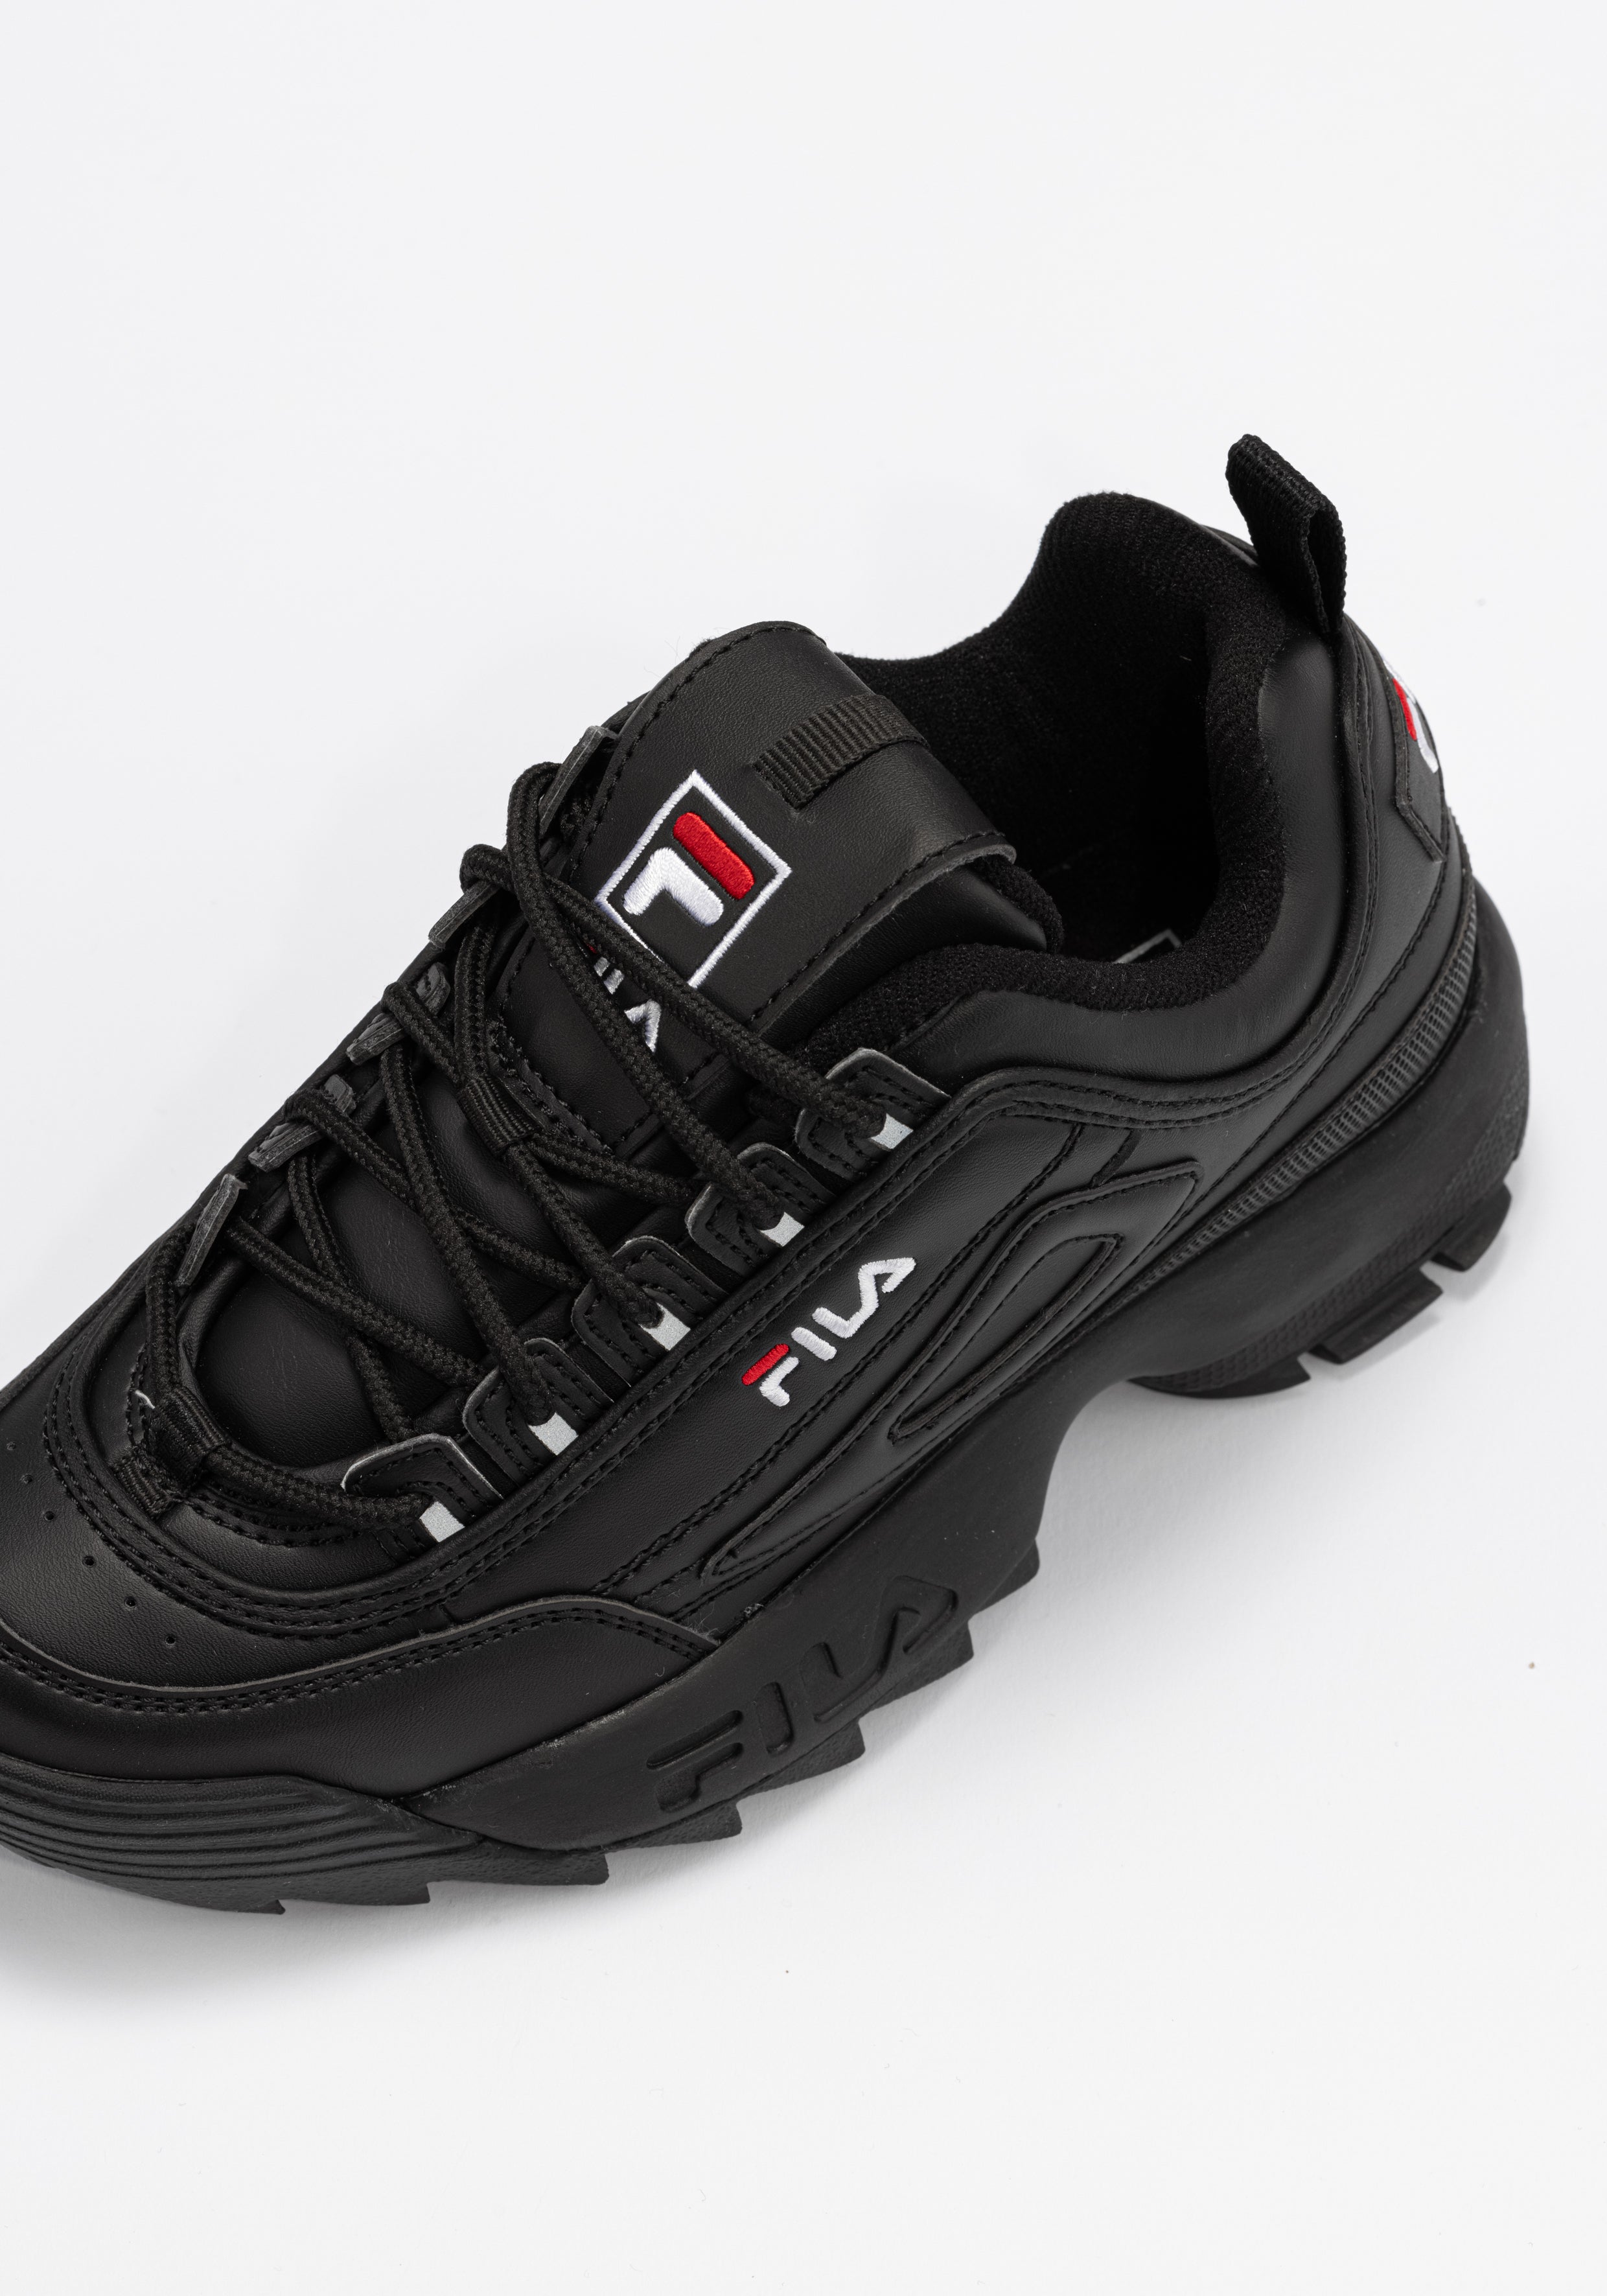 Disruptor Wmn in Black-Black Sneakers Fila   